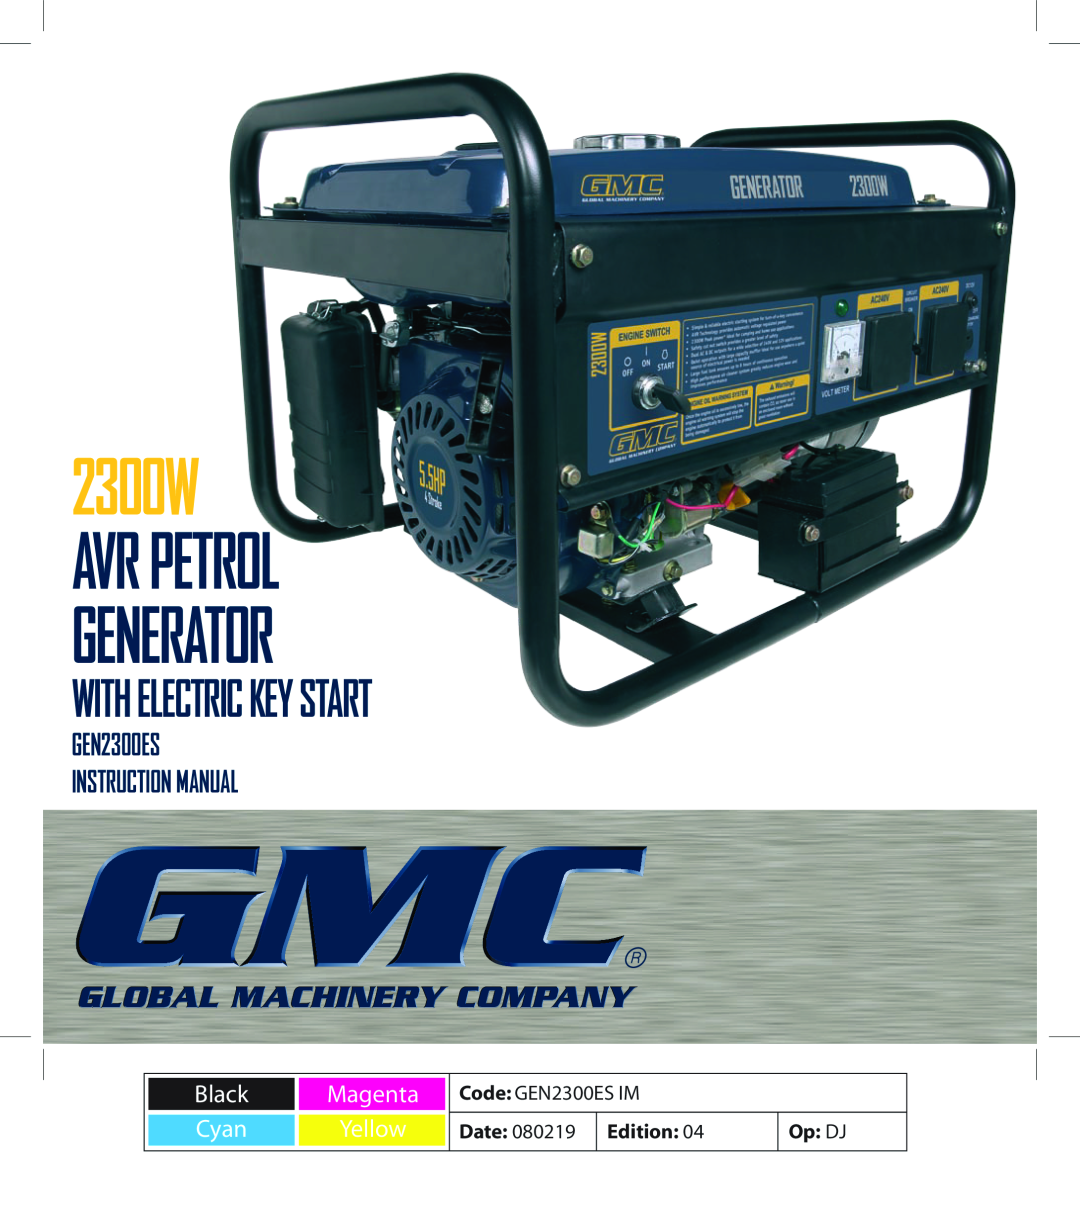 Global Machinery Company GEN2300ES instruction manual Date, Edition, Op DJ, 2300W AVR PETROL GENERATOR 